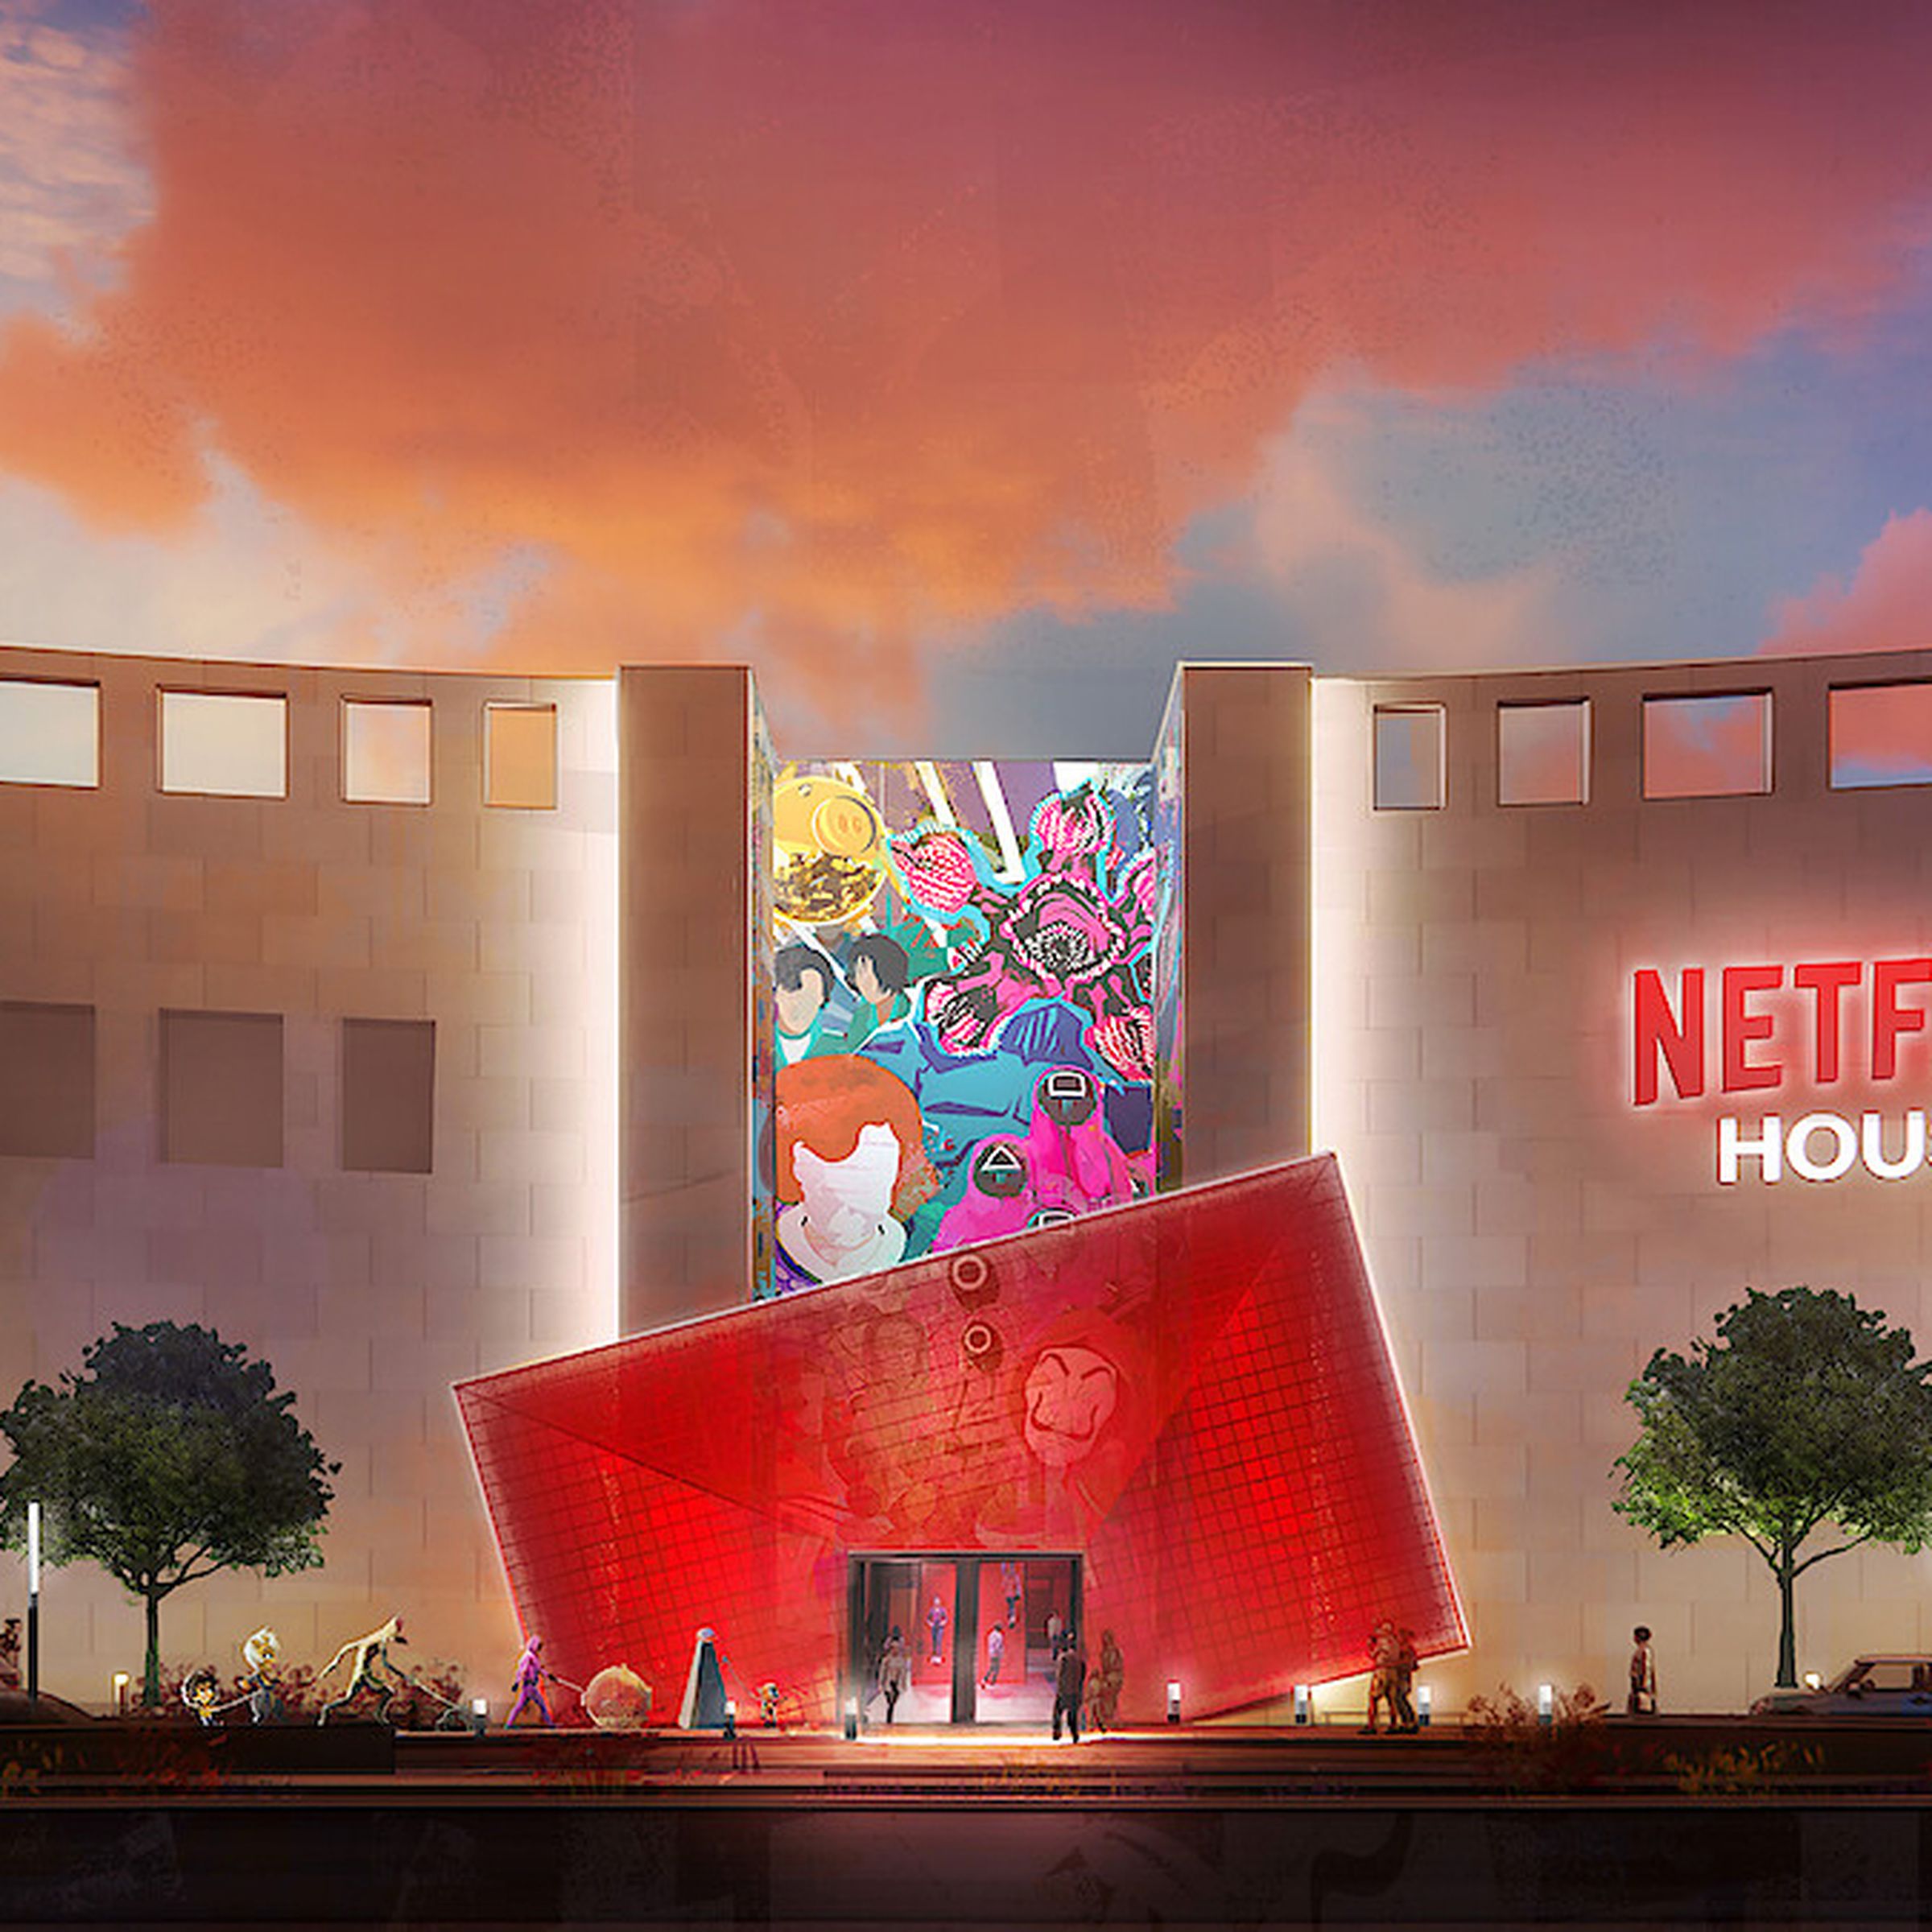 An artist’s conceptual illustration of a Netflix House building at dusk.